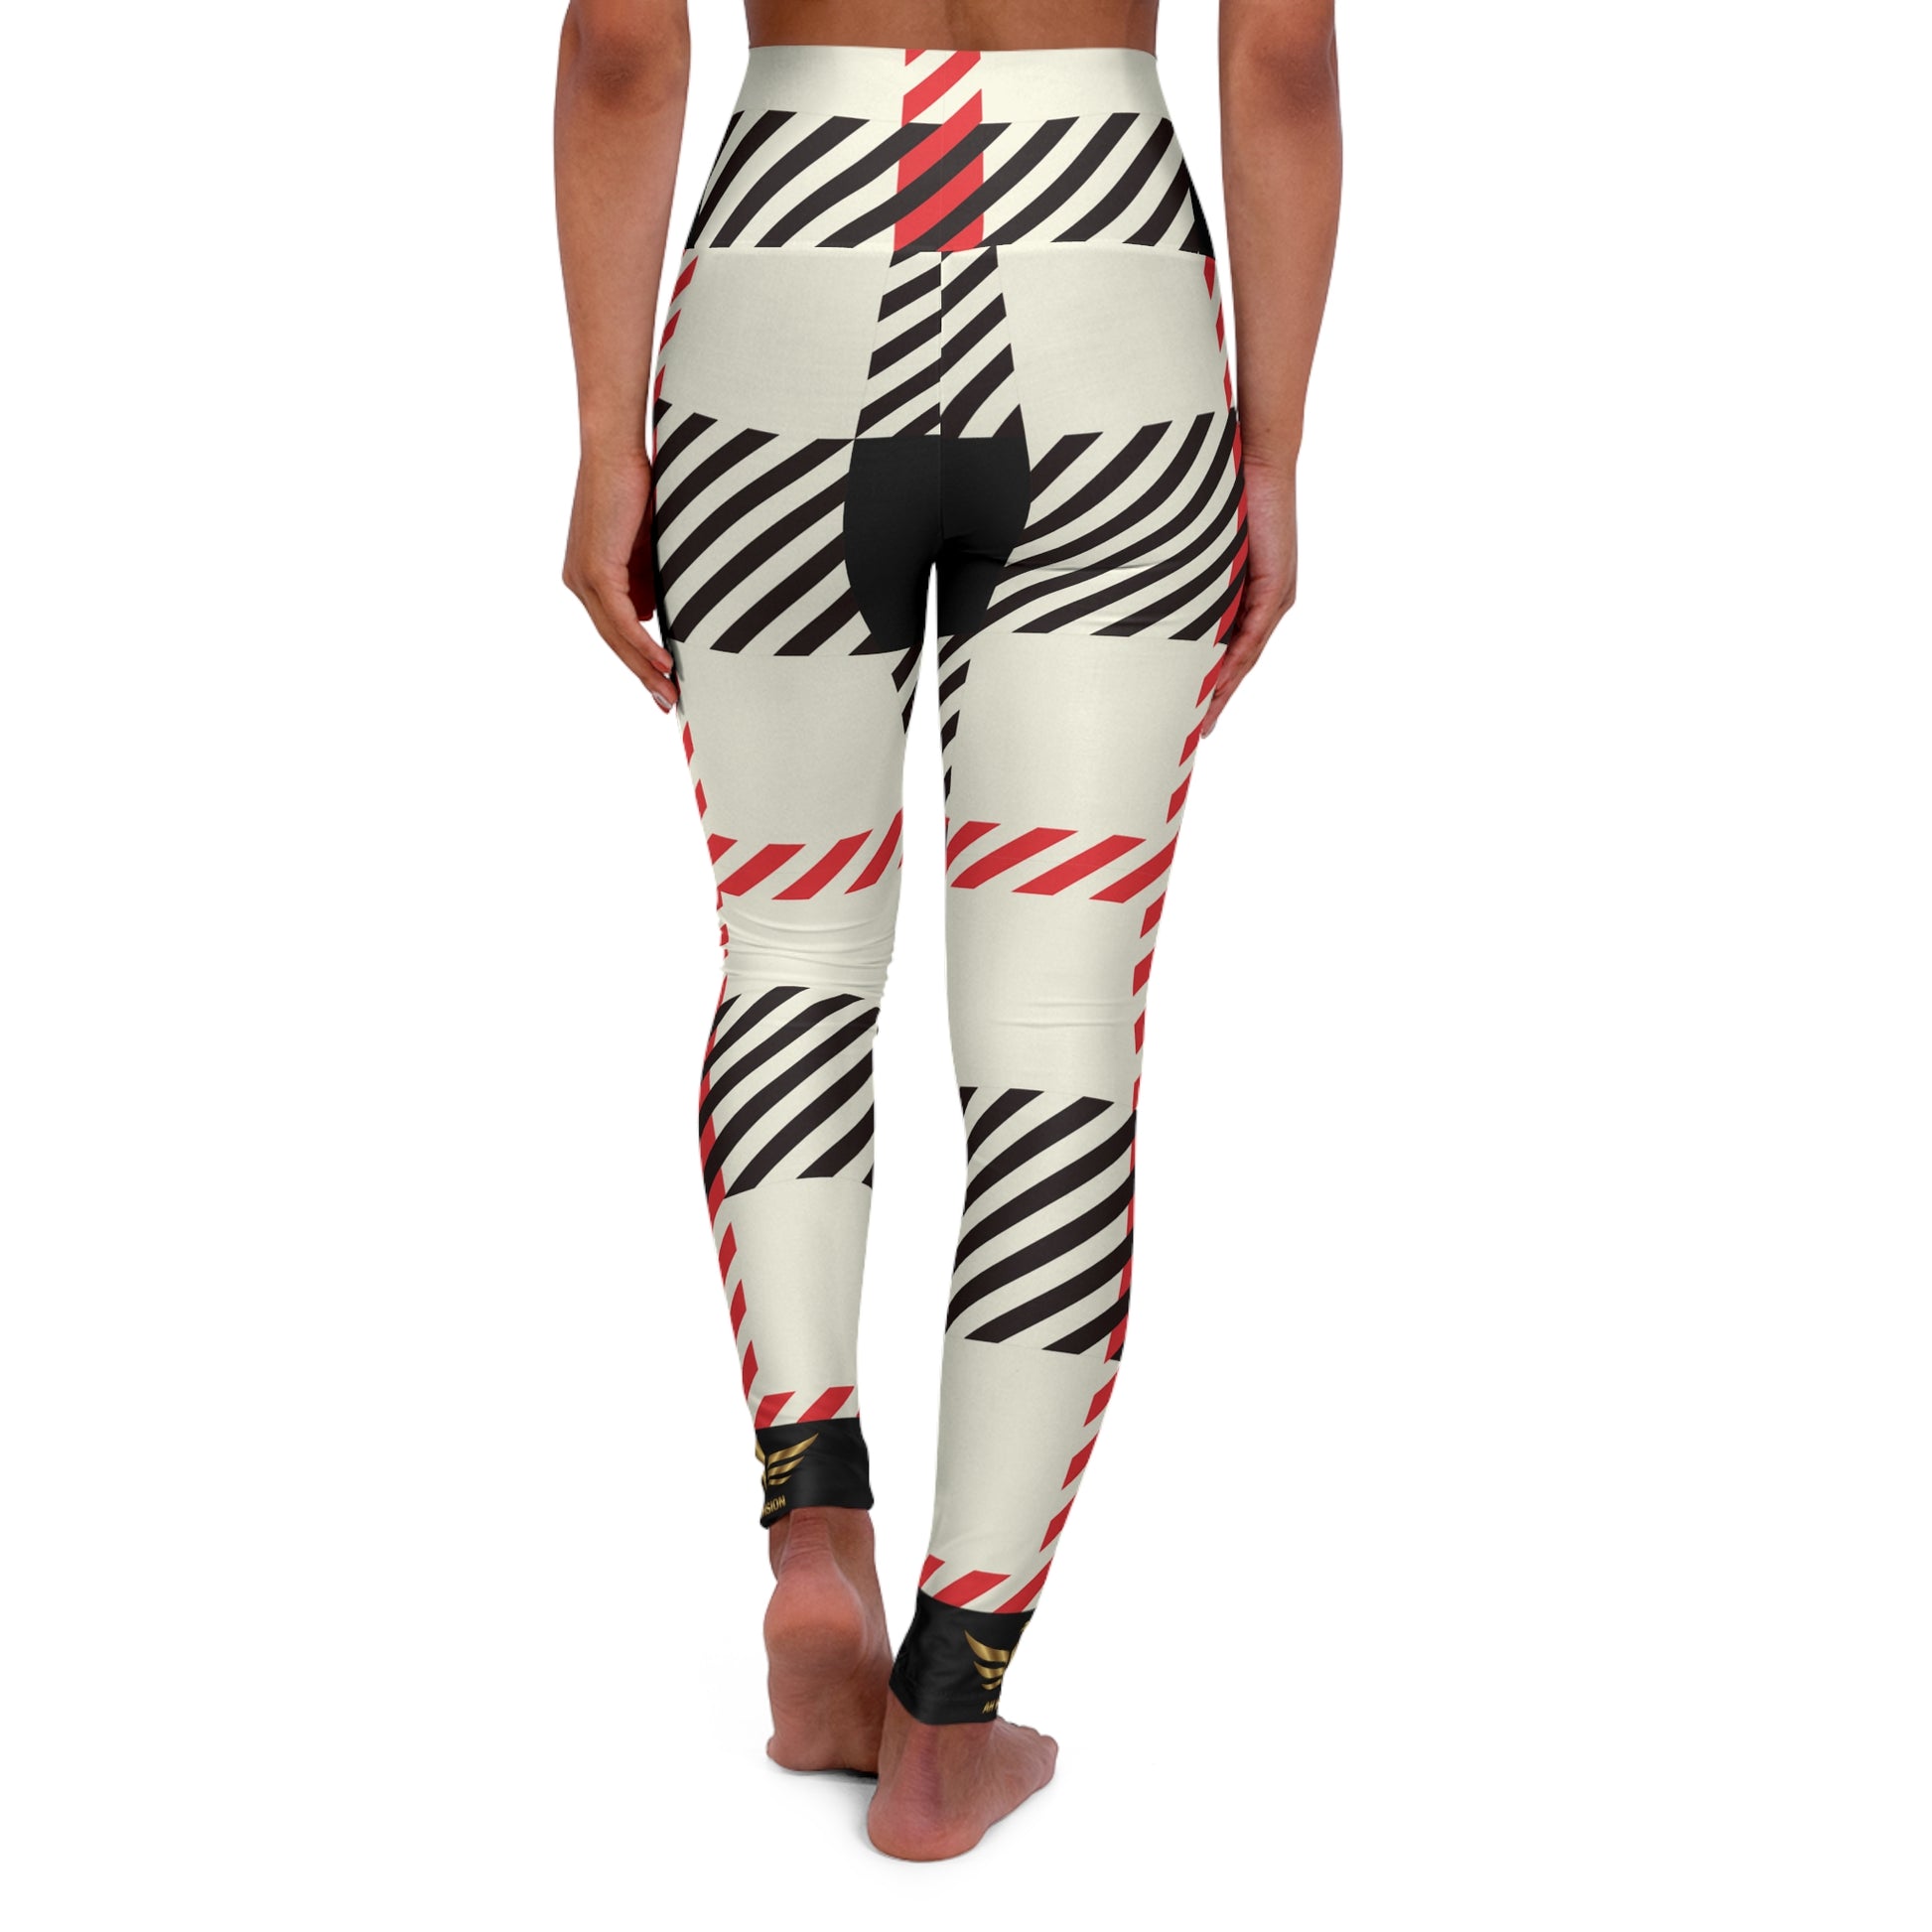 Premium AH Vision Black White Red Flannel High Waisted Yoga Leggings - AH VISION